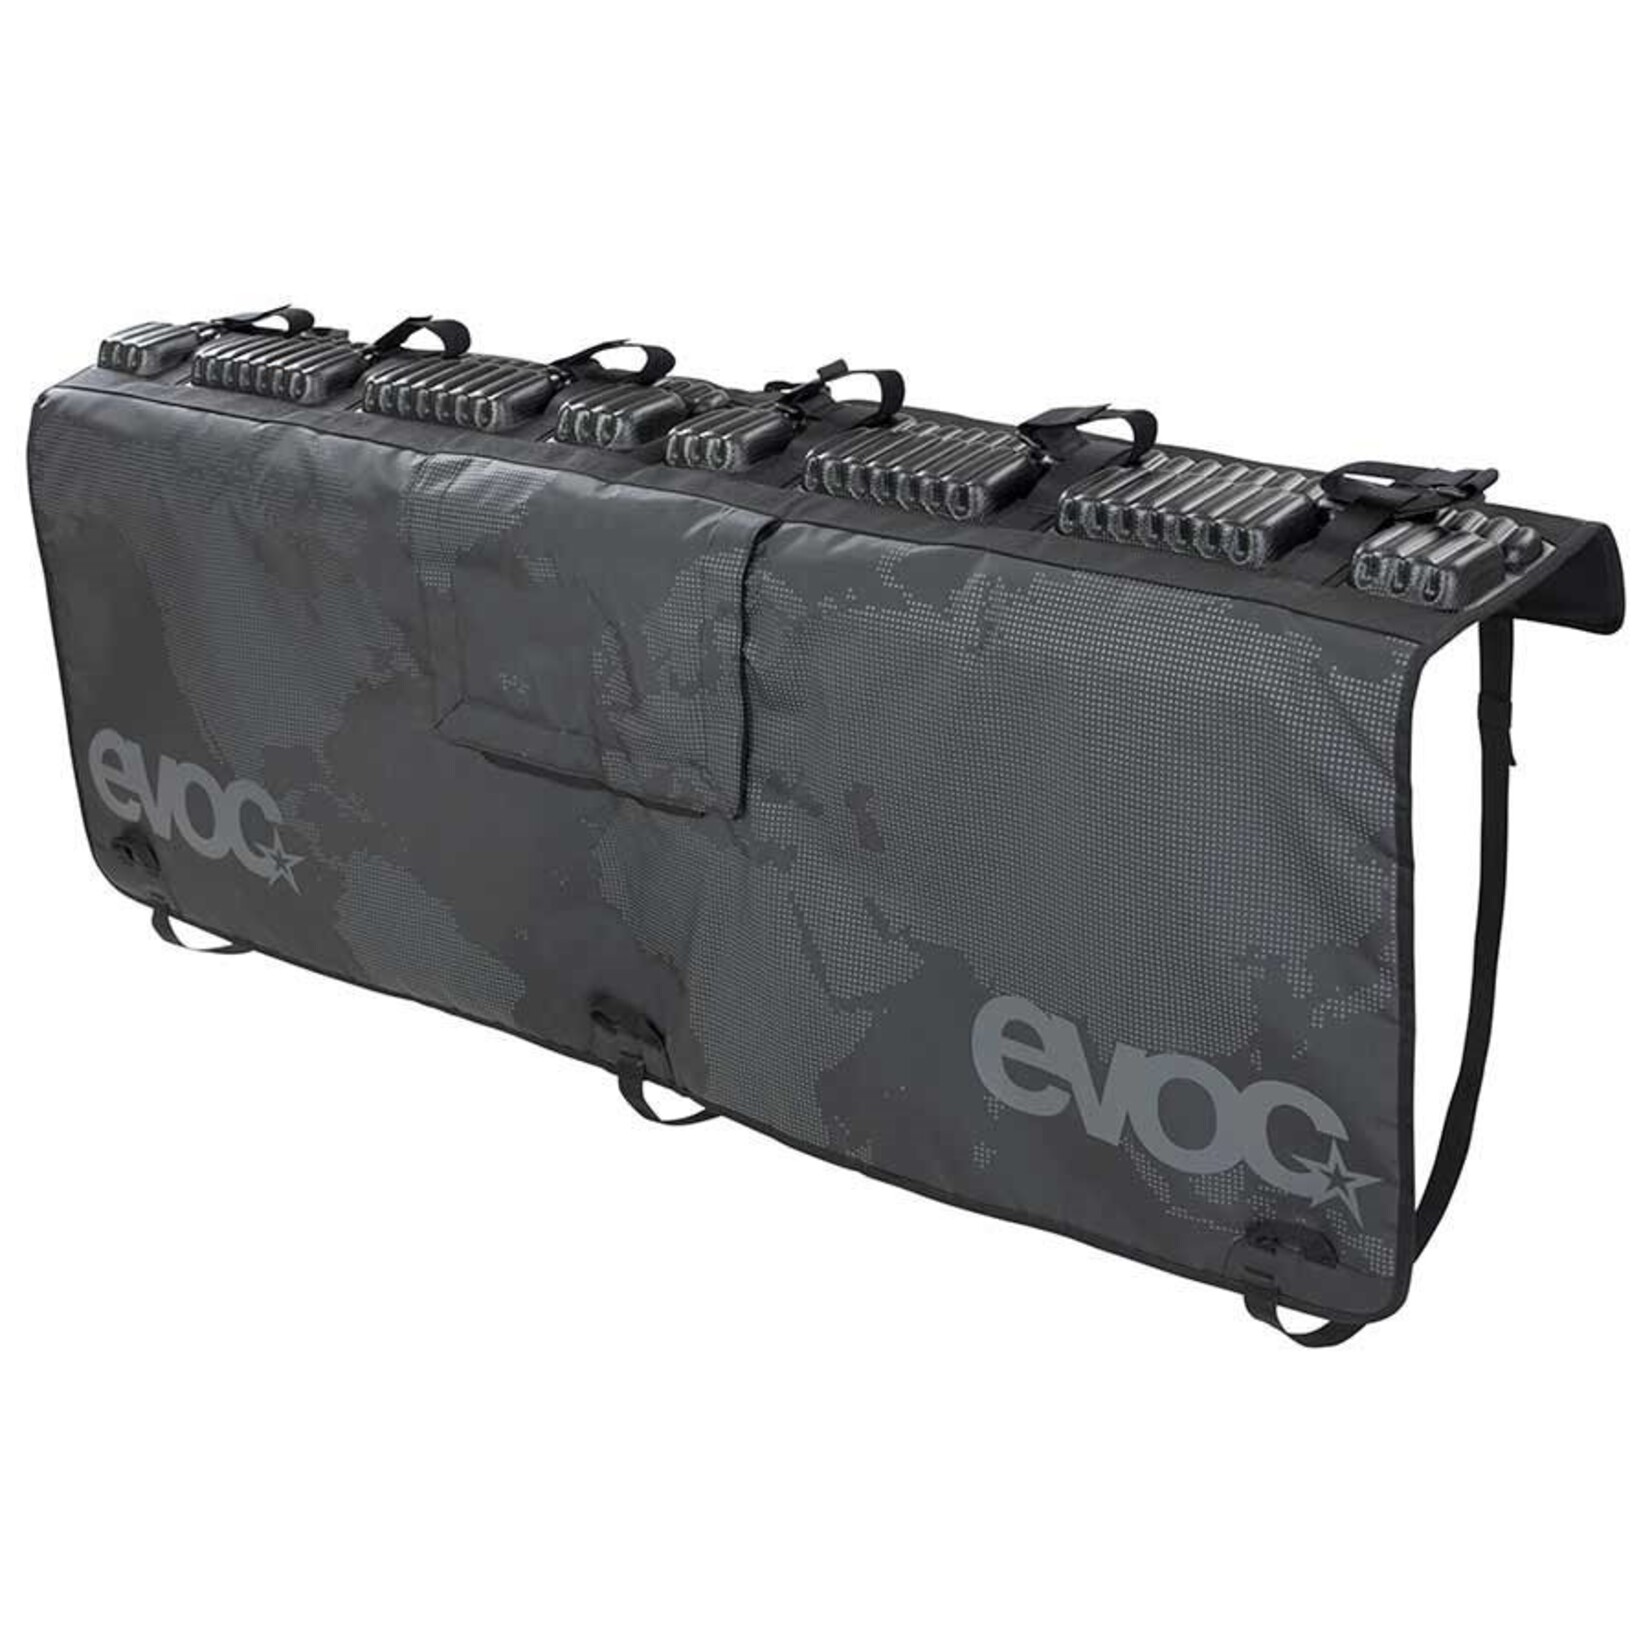 EVOC EVOC, Tailgate Pad, 136cm / 53.5'' wide, for mid-sized trucks, Black